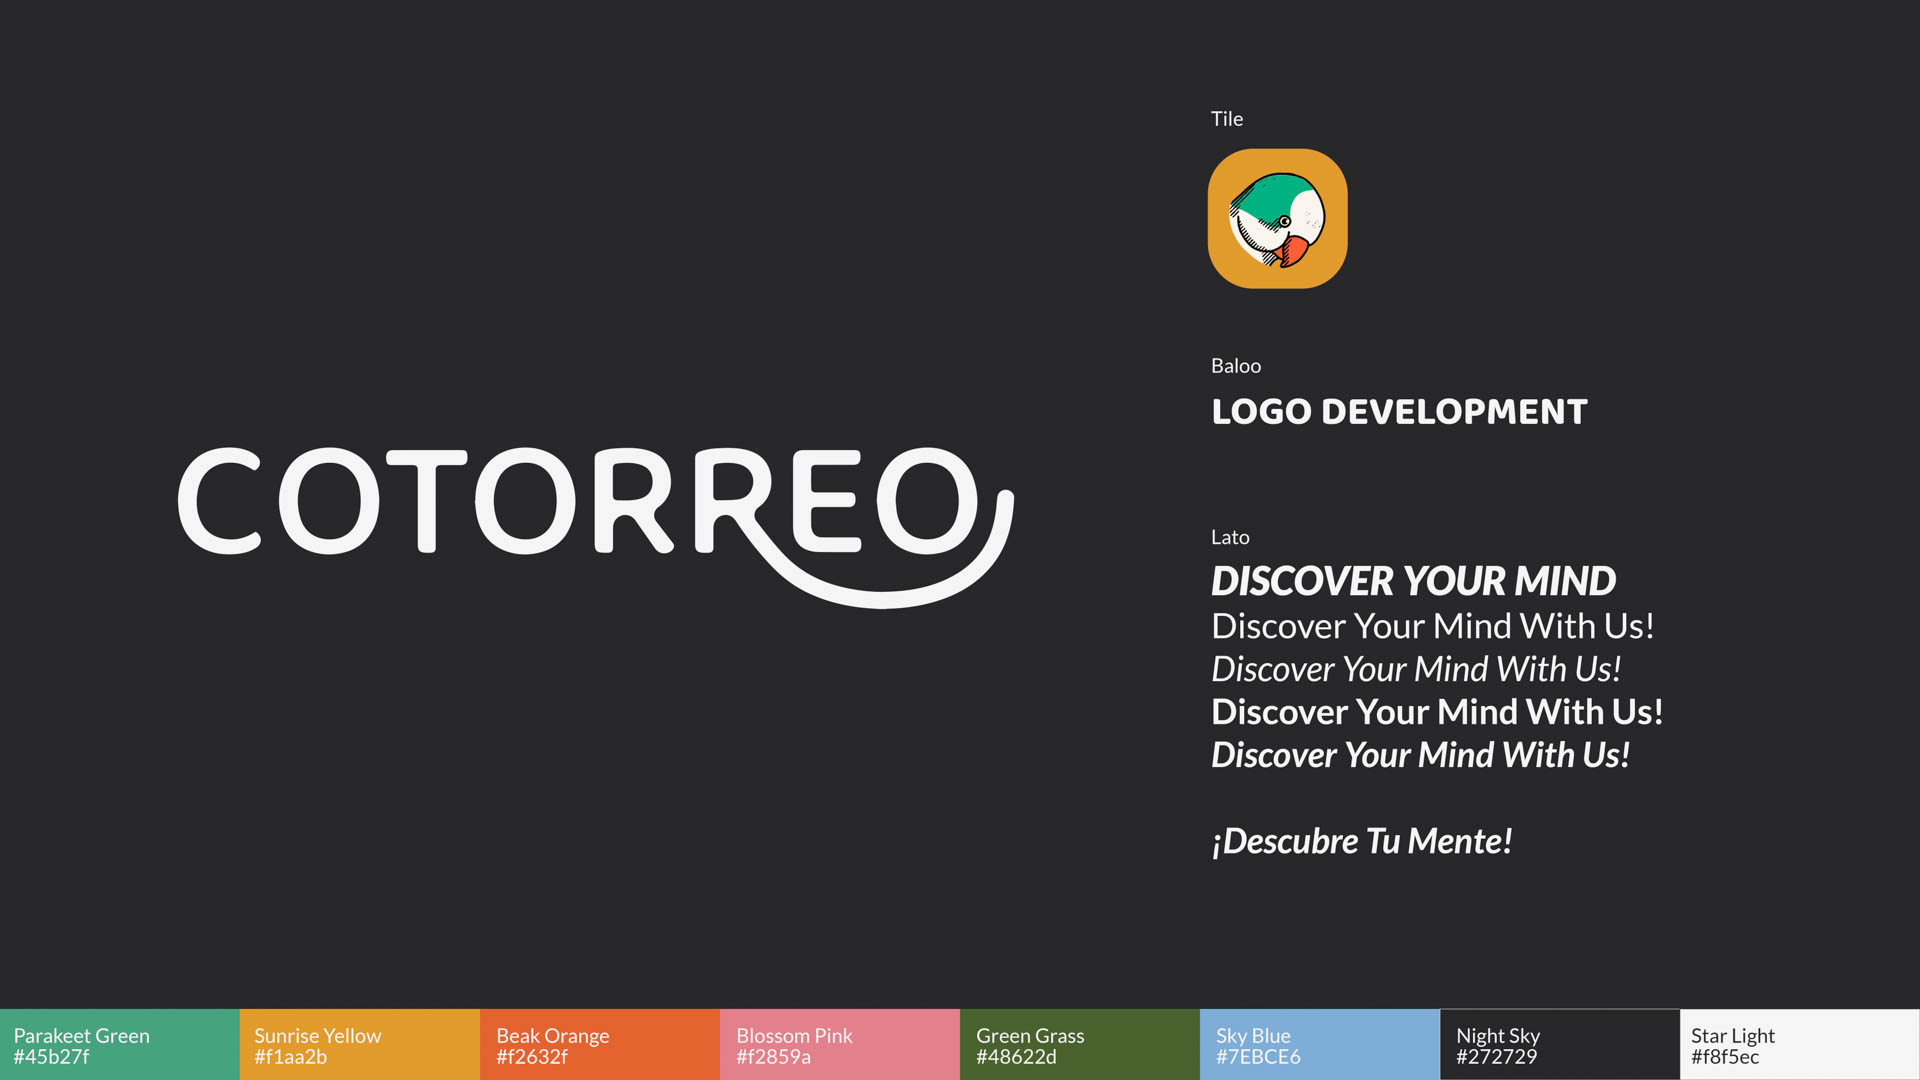 The Cotorreo  app logo on black background